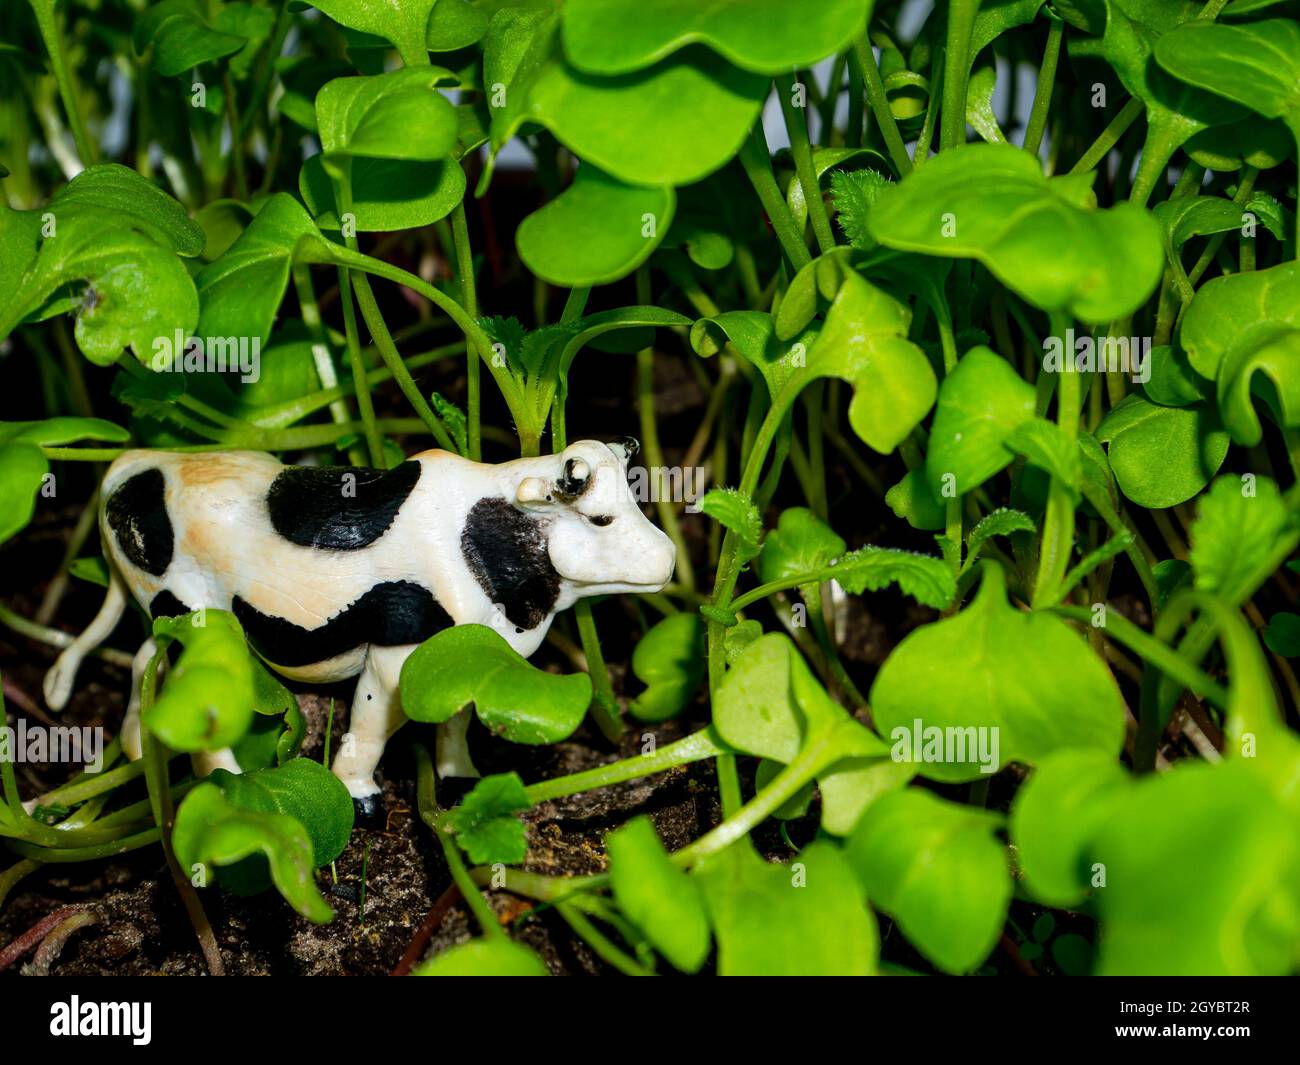 Mucca bianca animale con macchie nere in erba verde. Mucca di bestiame. Erba verde. Allevamento di bovini. Allevamento di bestiame. Agricoltura. Bestiame. Fattoria di latte. Latticini c Foto Stock